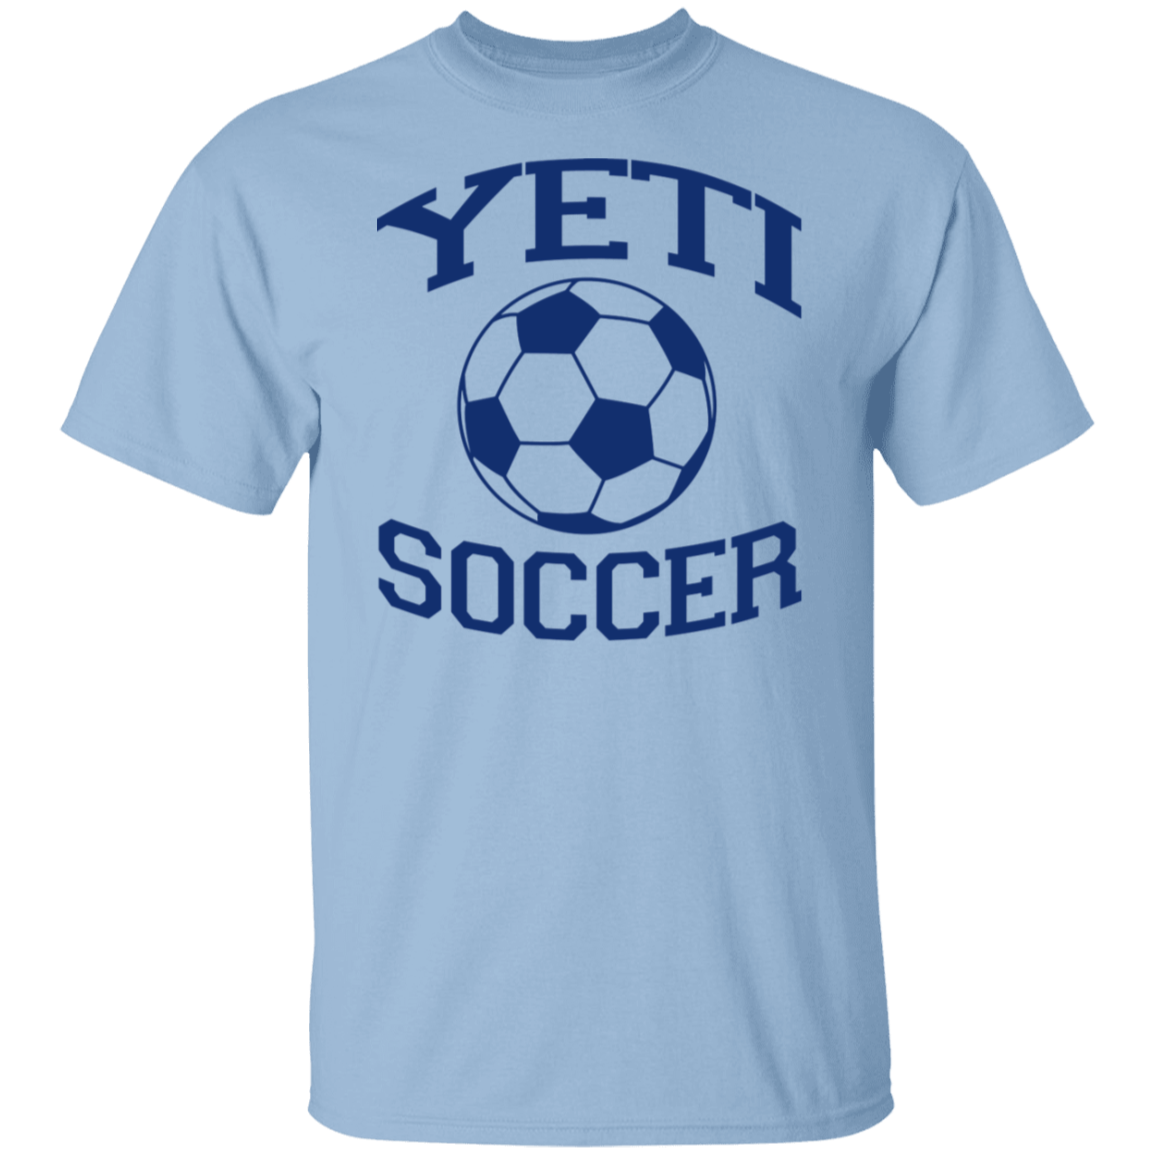 Yeti Soccer Blue Print T-Shirt